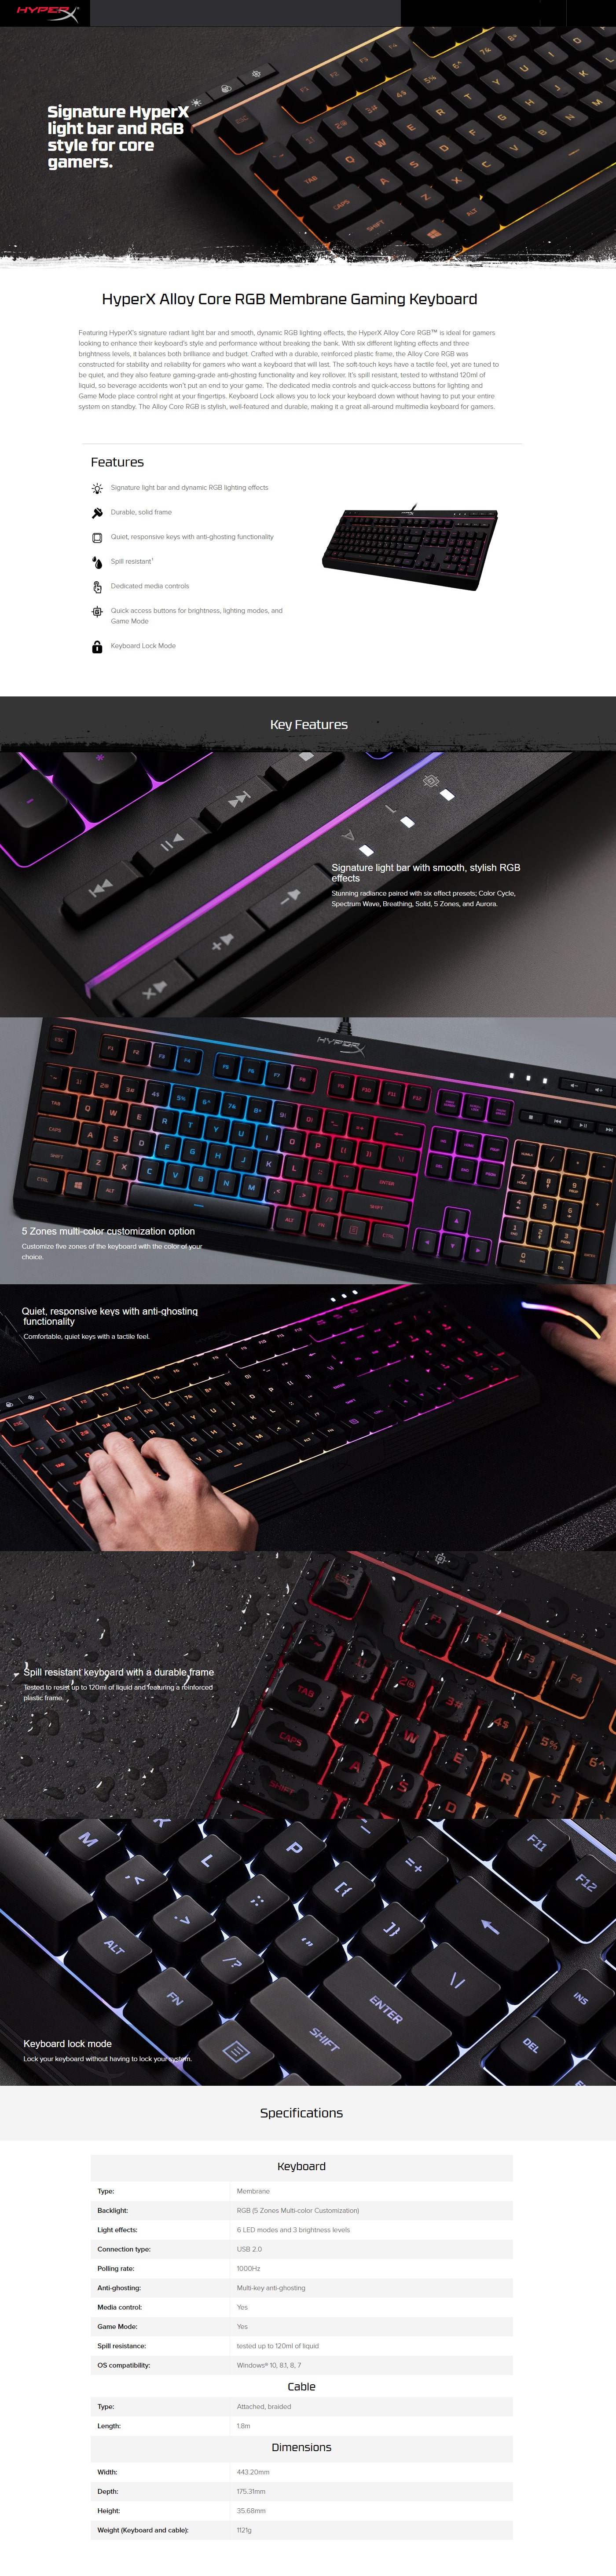 Buy Online HyperX Alloy Core RGB Membrane Gaming Keyboard (HX-KB5ME2-US)